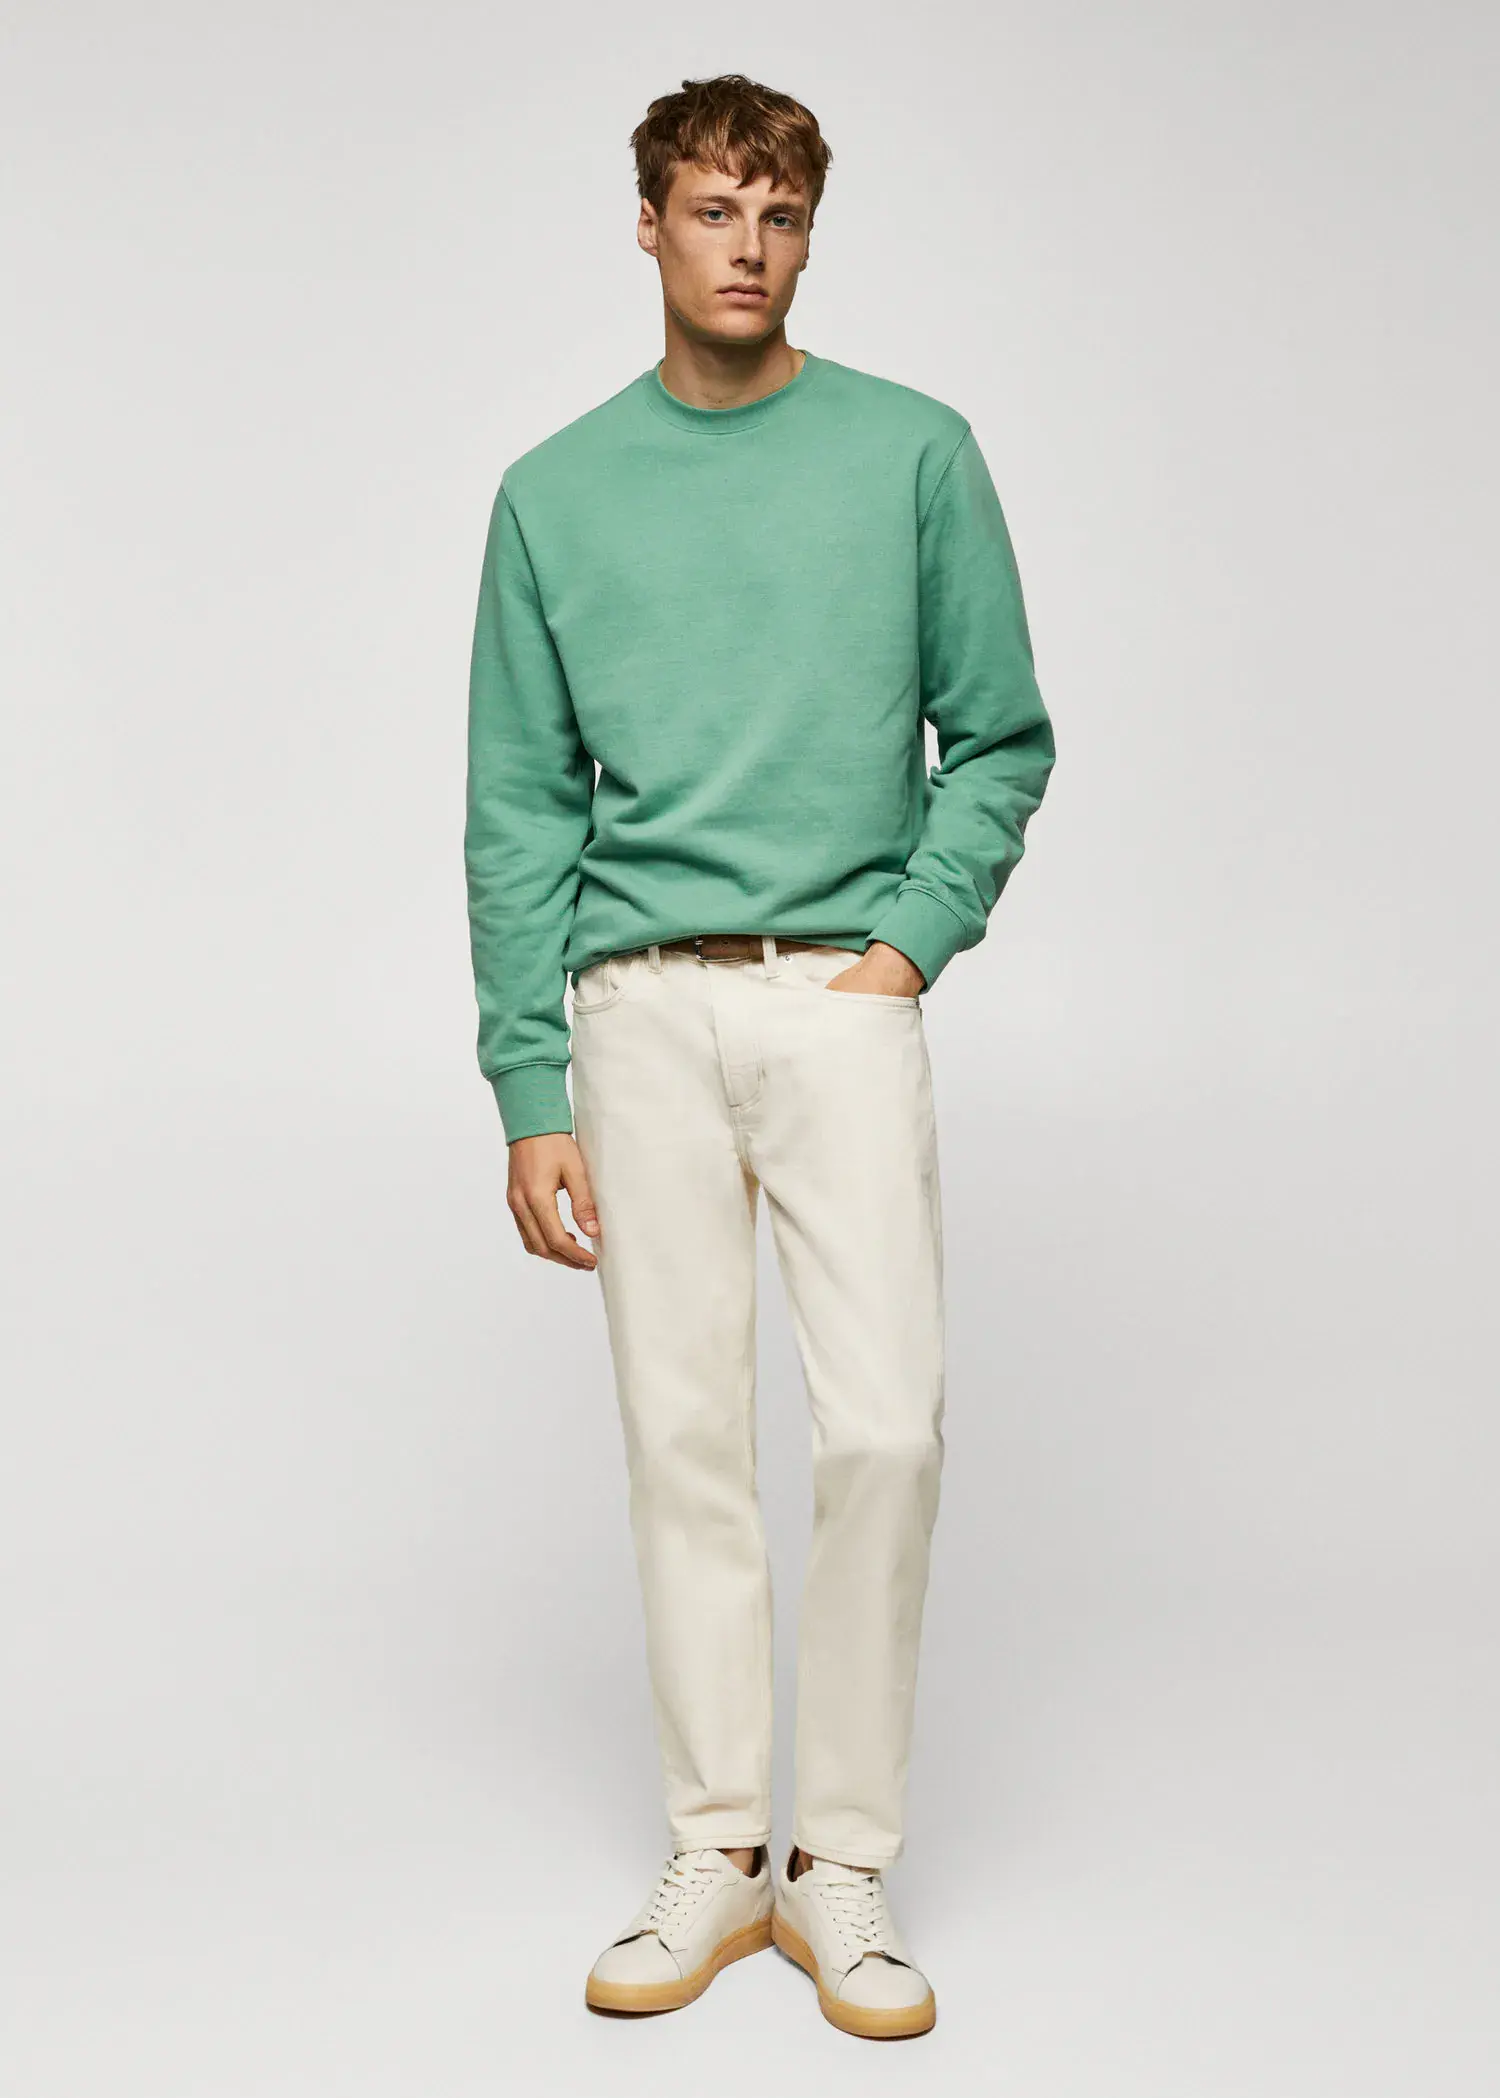 Mango 100% cotton basic sweatshirt . a man wearing a green sweatshirt and white pants. 